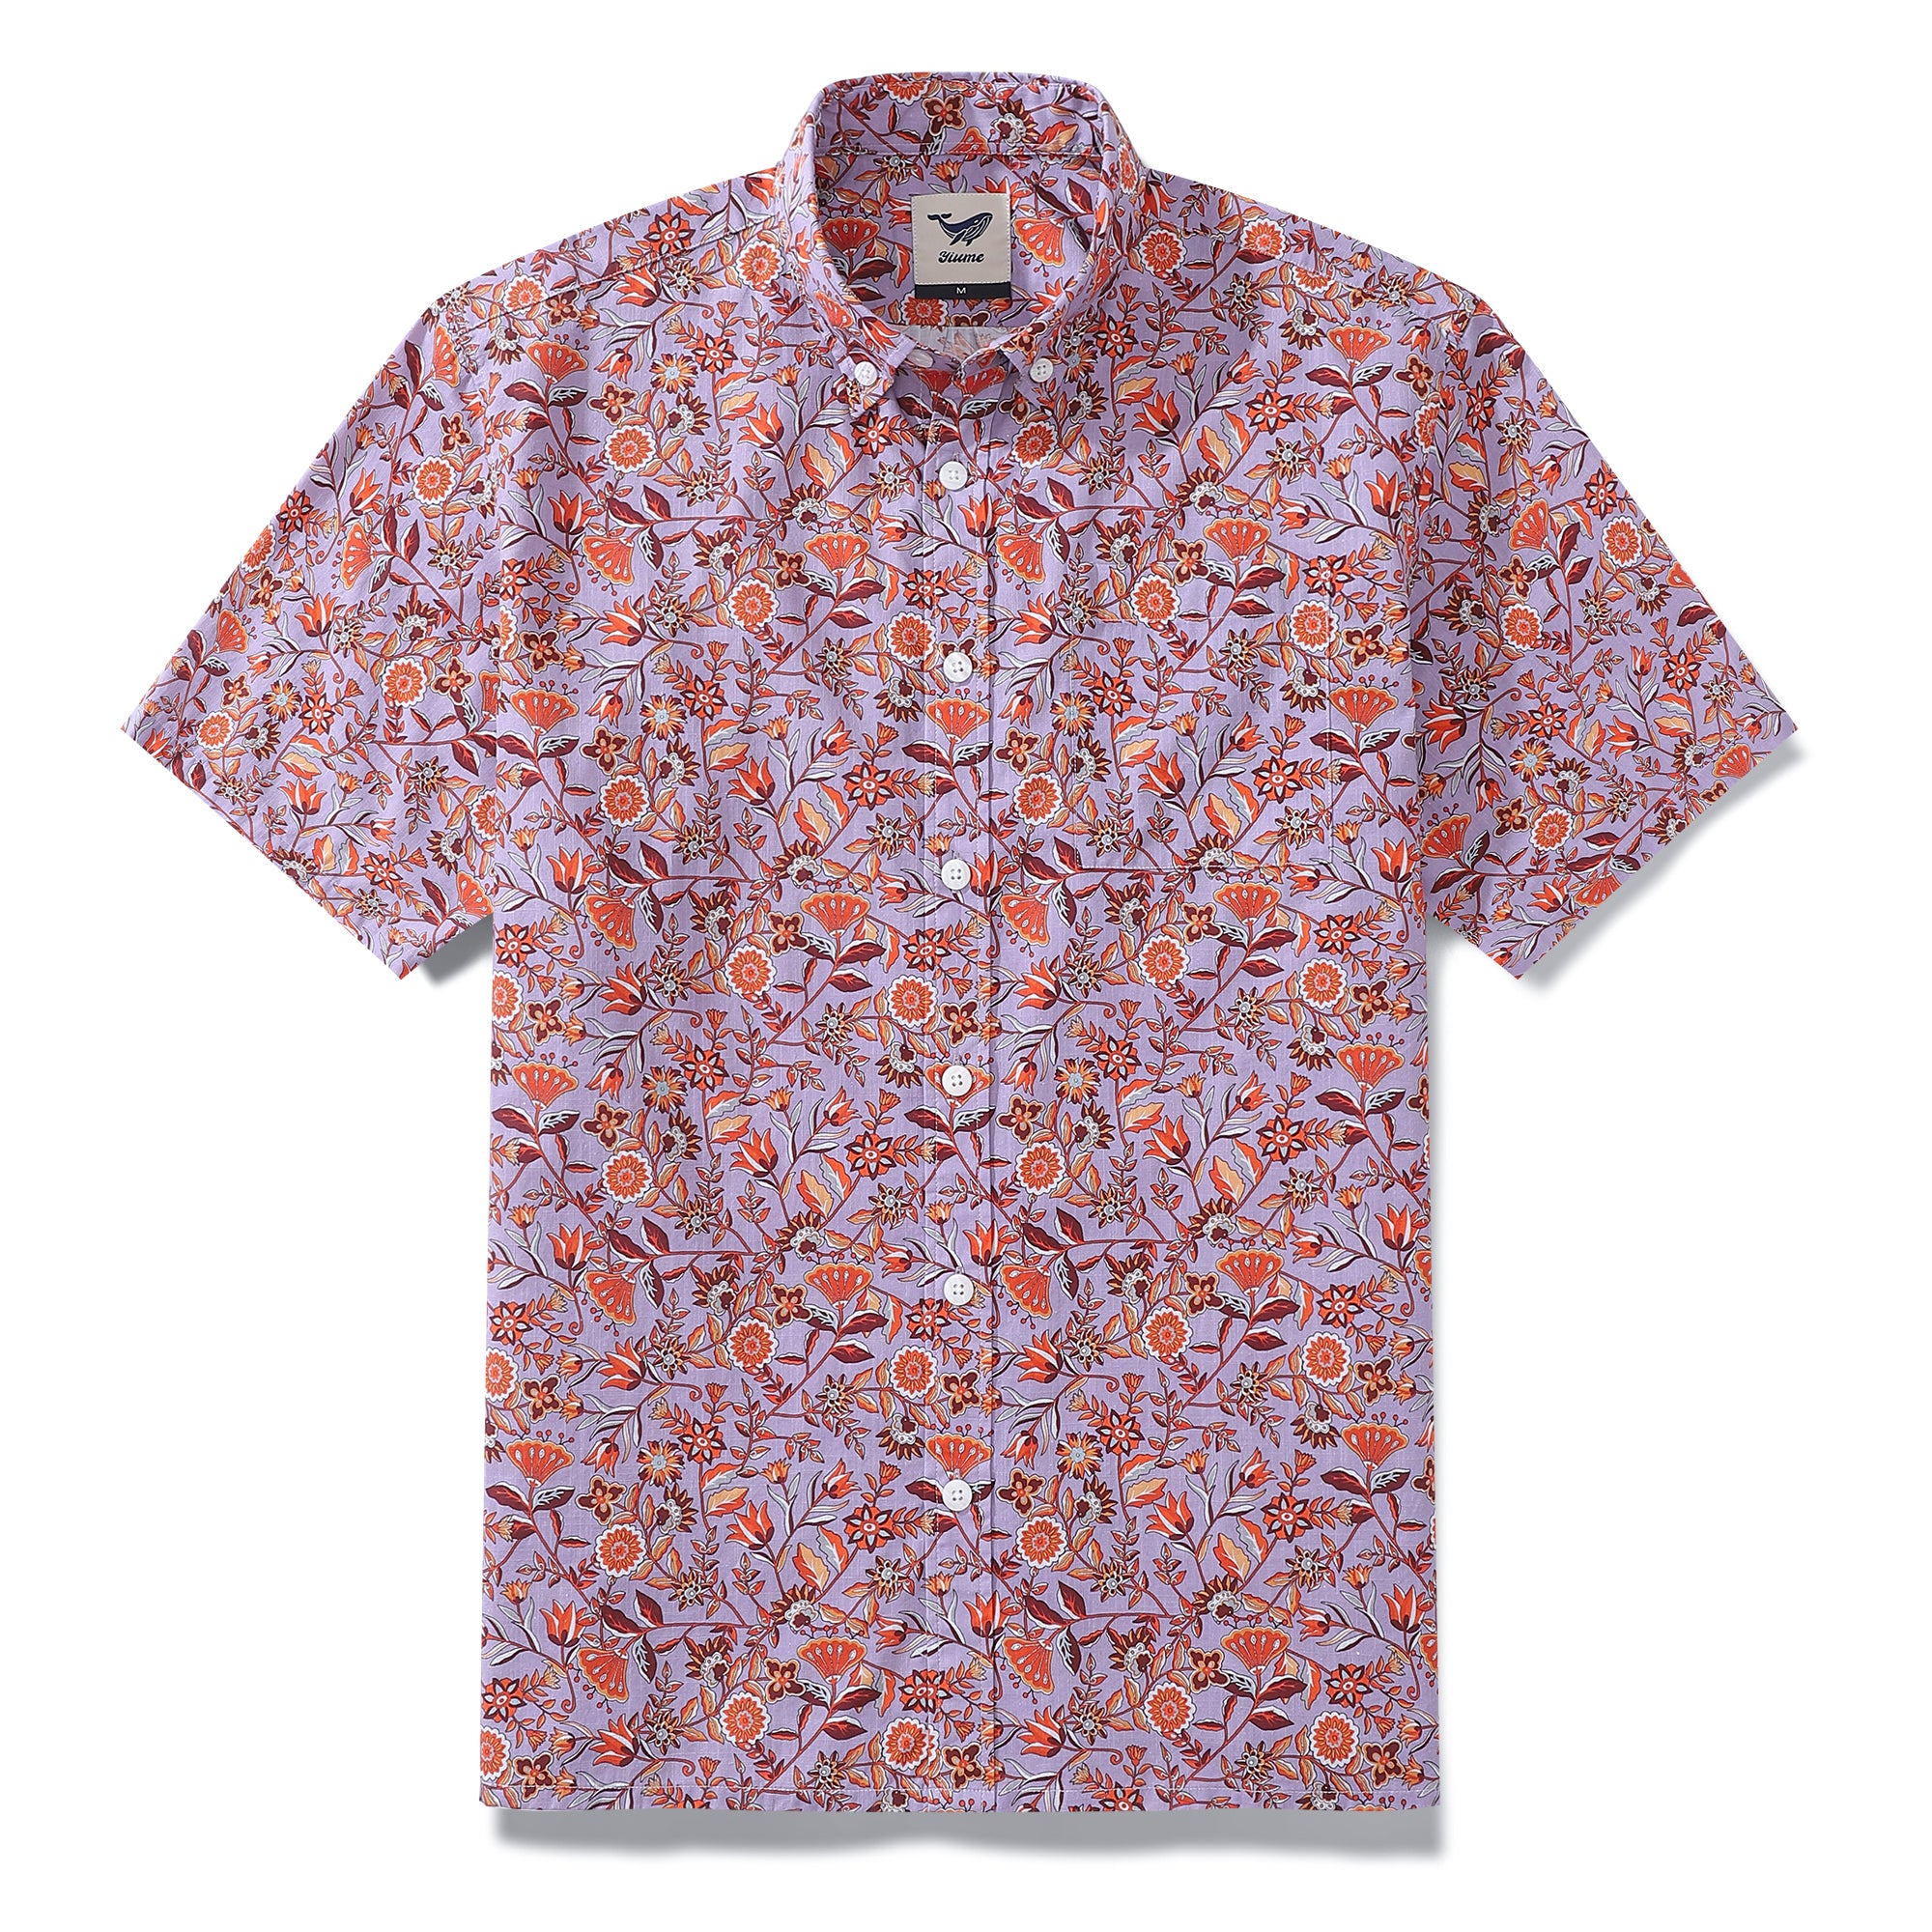 Men's Hawaiian Shirt Purple Orange Multicolored Print Cotton Button-do ...